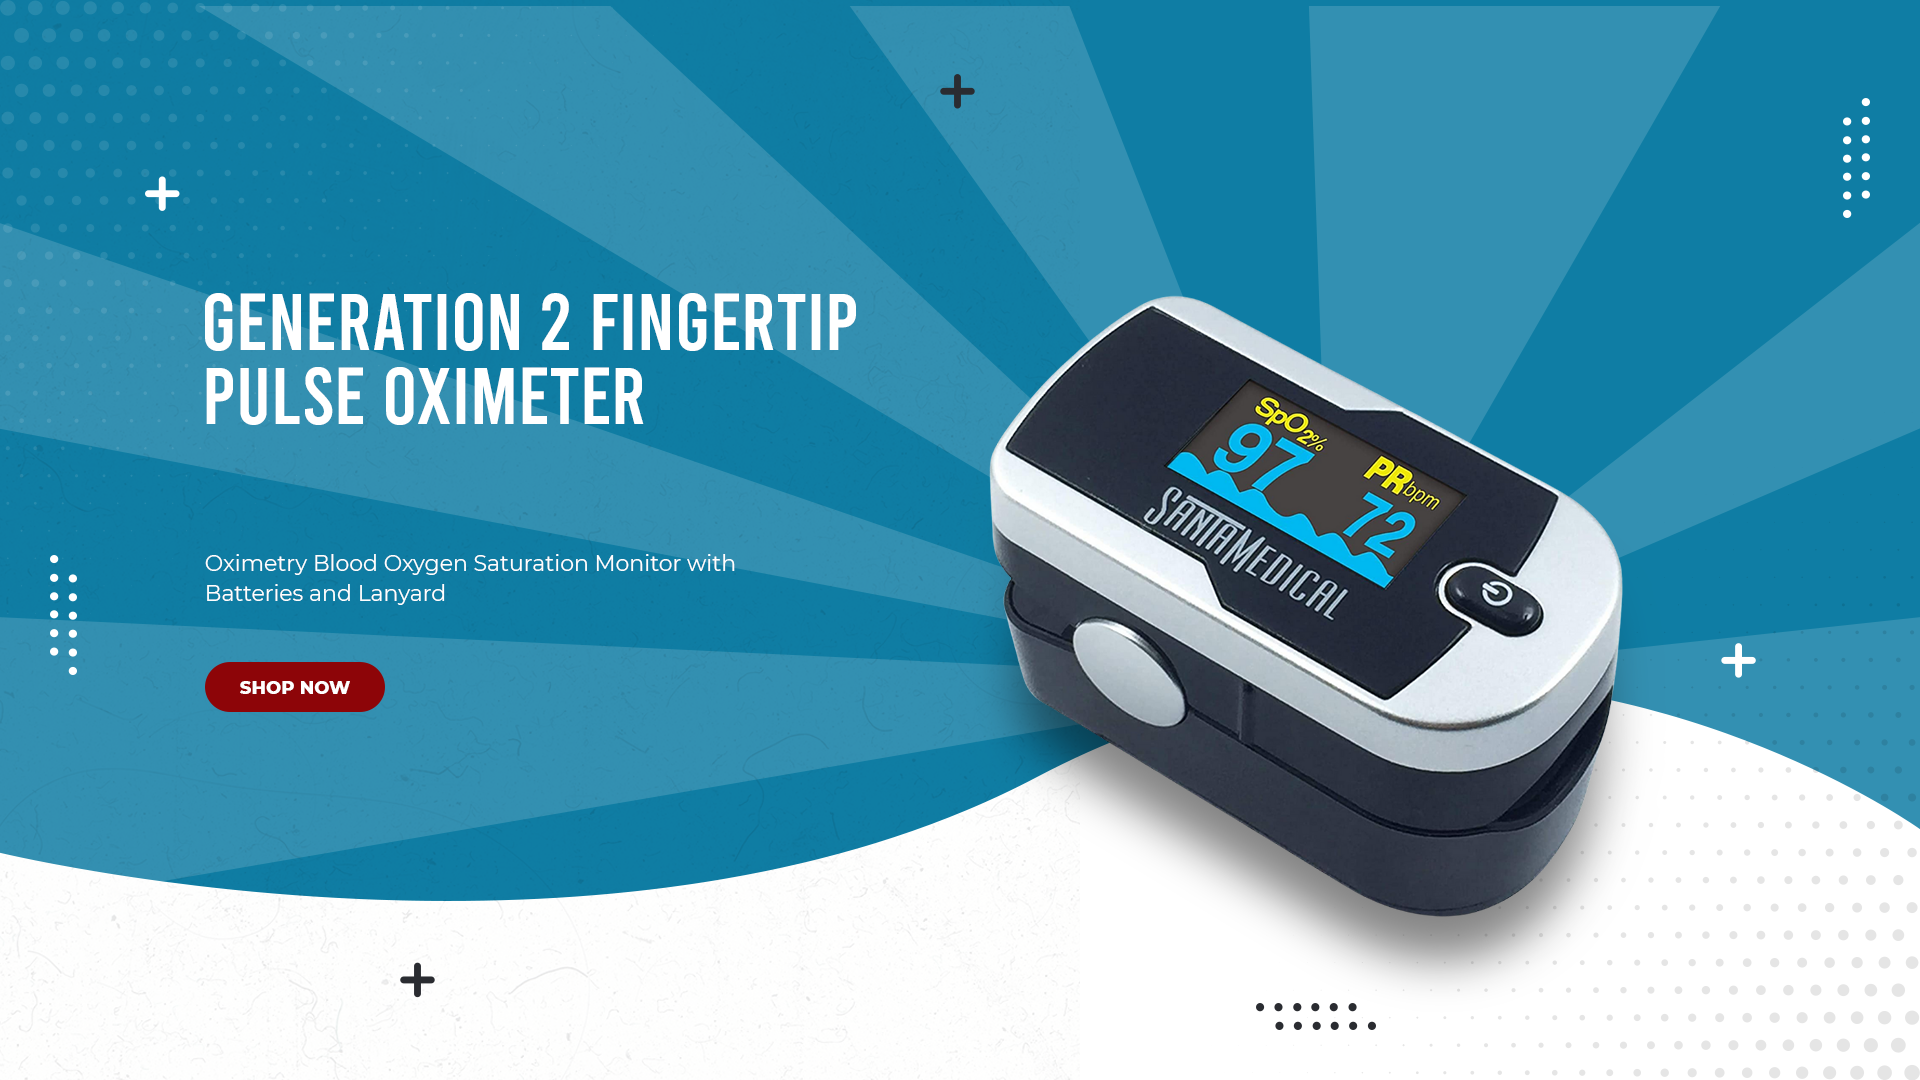 Generation 2 Fingertip Pulse Oximeter